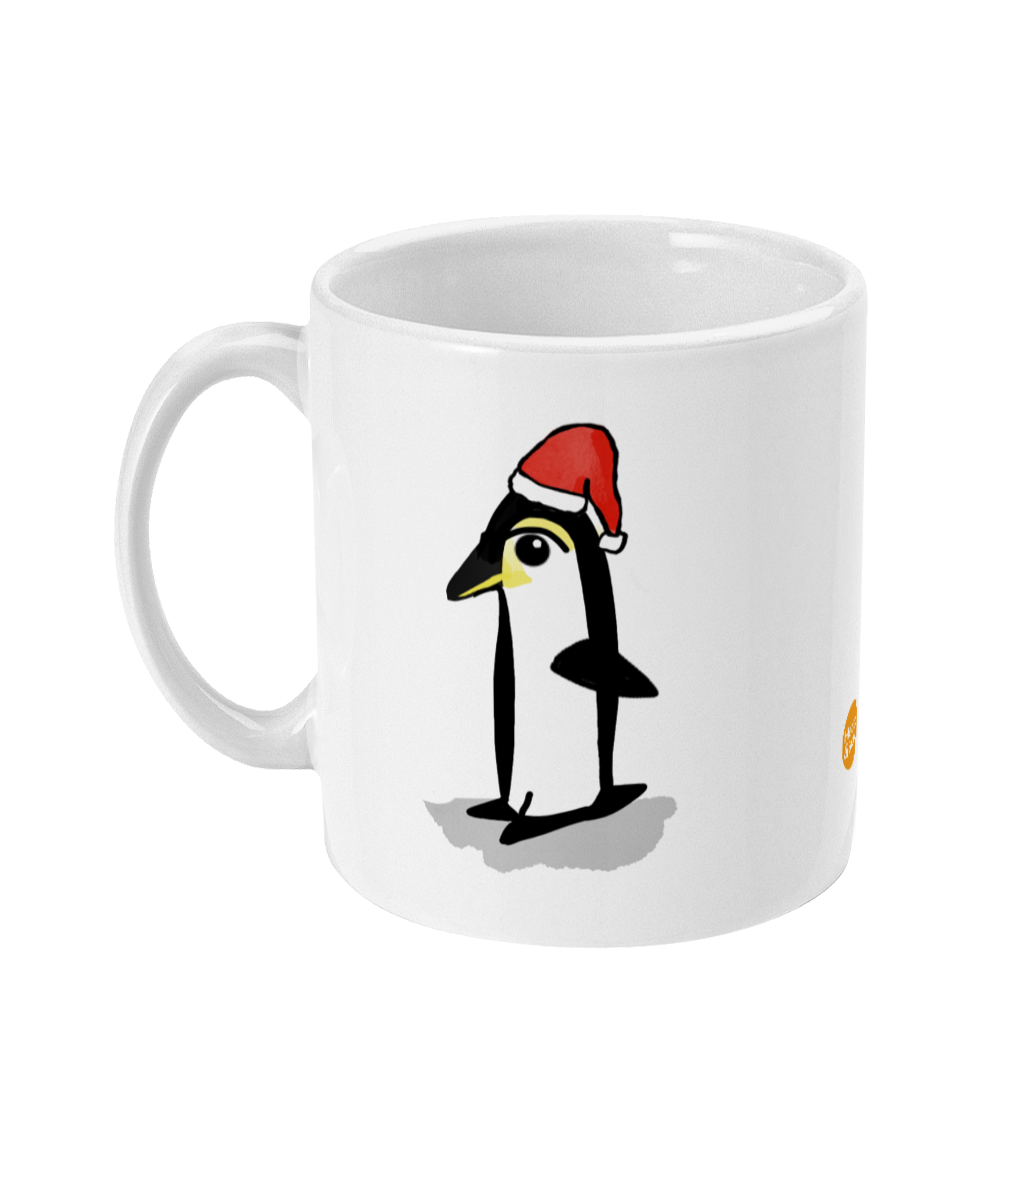 Santa Penguin Christmas Mug - Cute illustrated Xmas Penguin coffee mug by Hector and Bone Left View